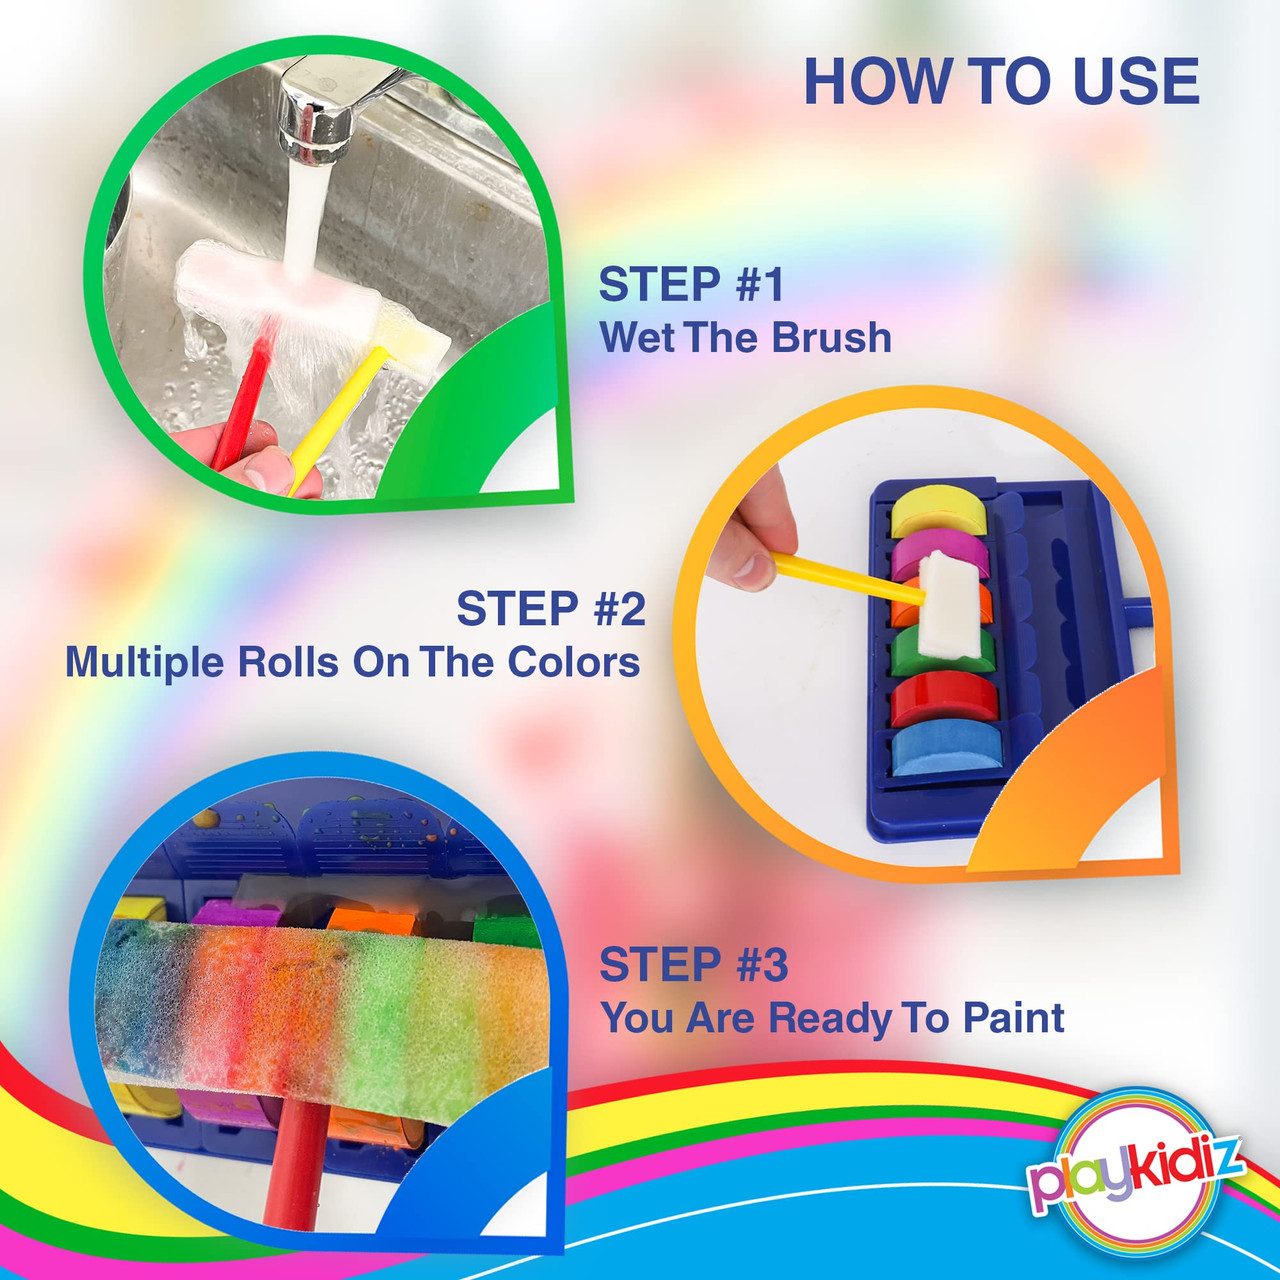 Playkidiz Rainbow Watercolor Washable Classic Colors Painting Set, 12 Piece Complete Paint Set for Kids, Includes 6 Foam Paintbrushes and 6